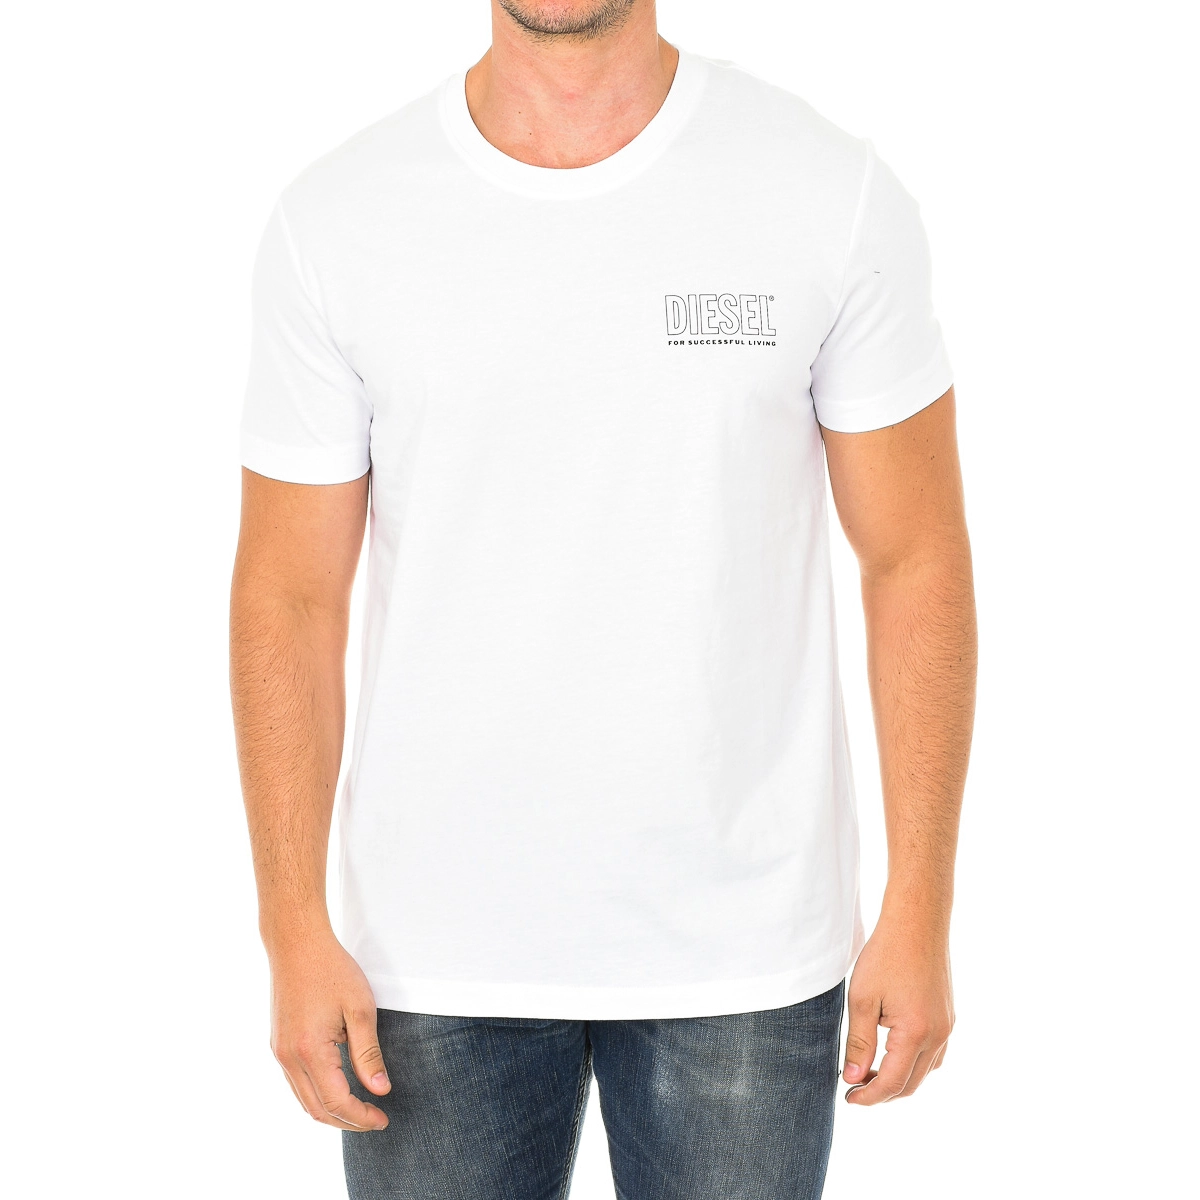 Camiseta de manga corta cuello redondo Diesel 00CG46-0QAZN hombre Talla: S Color: Blanco 00CG46-0QAZN-100.S